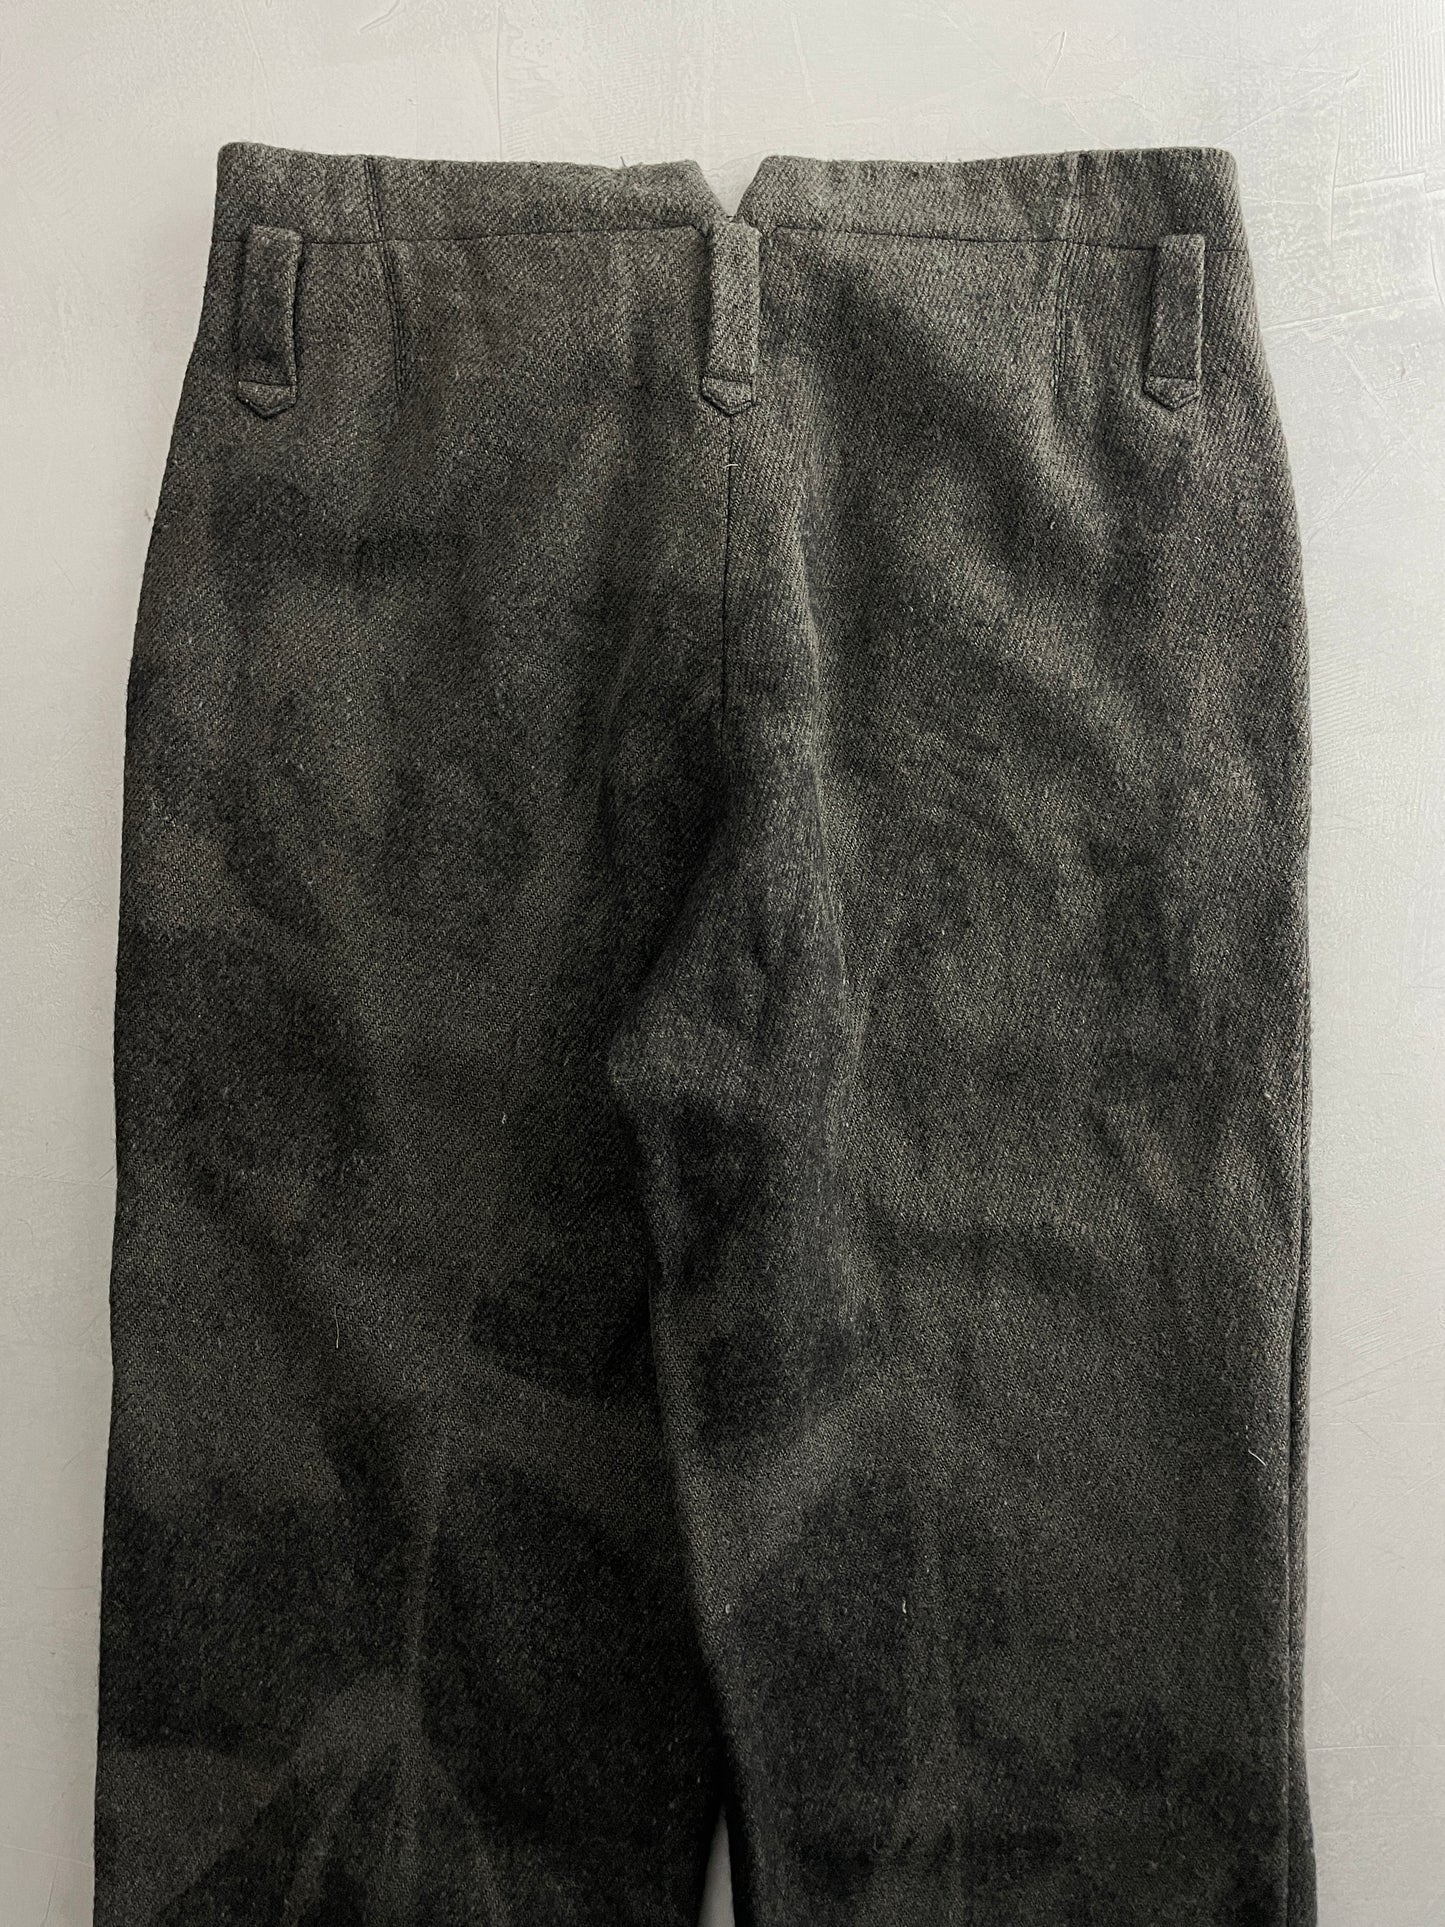 40's Overdyed Japanese Work Pants [32"]